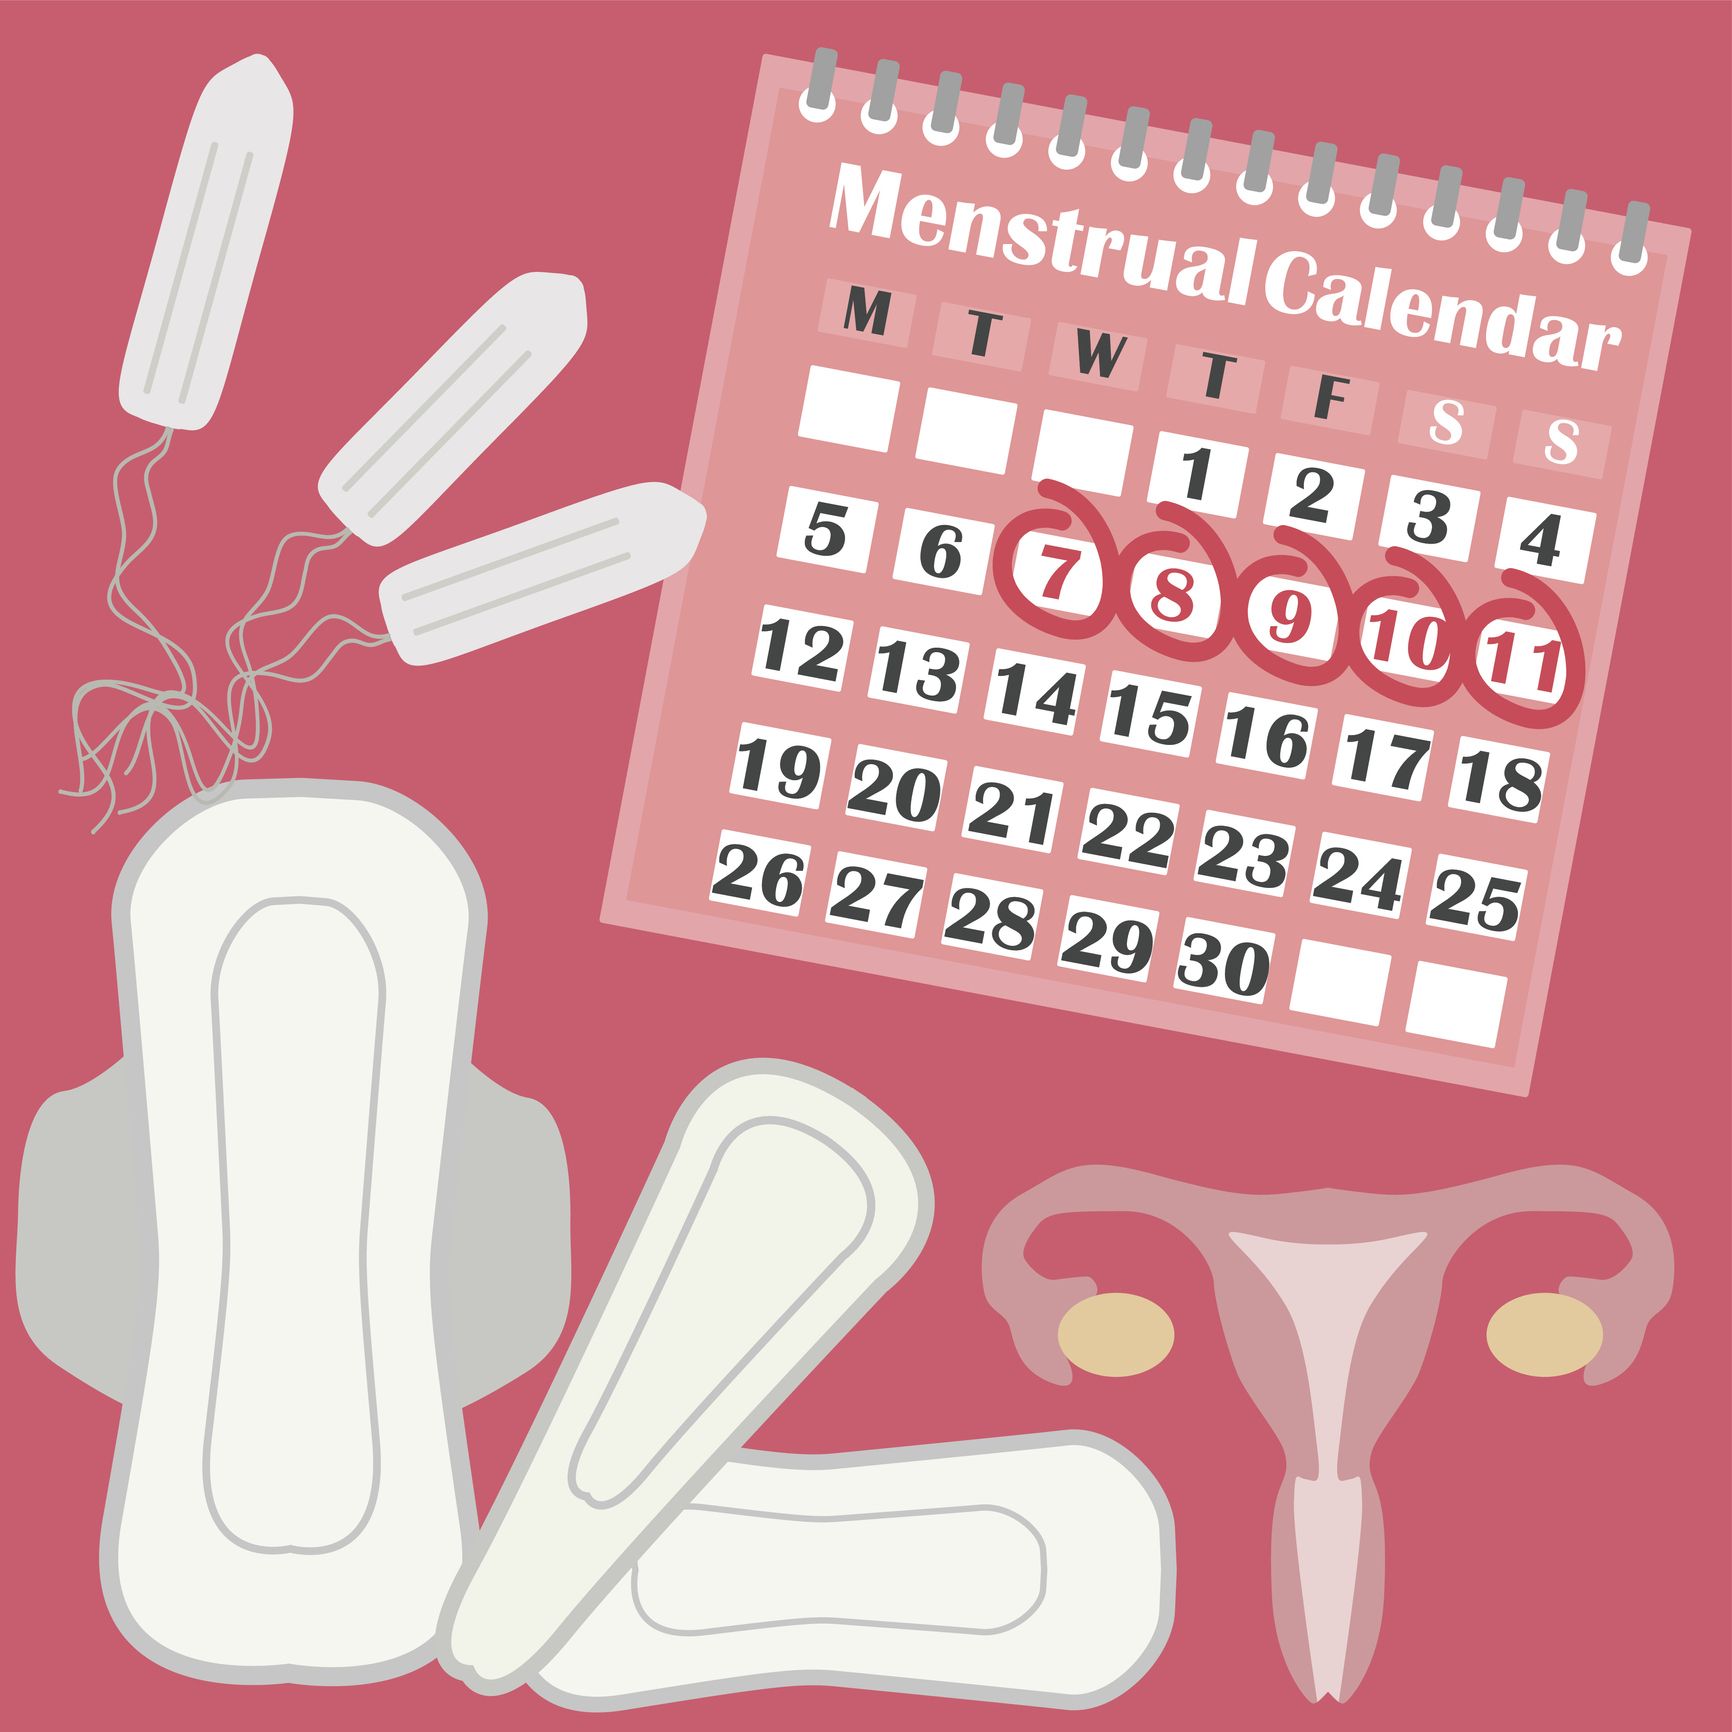 Natural Family Planning Calendar Method Chart